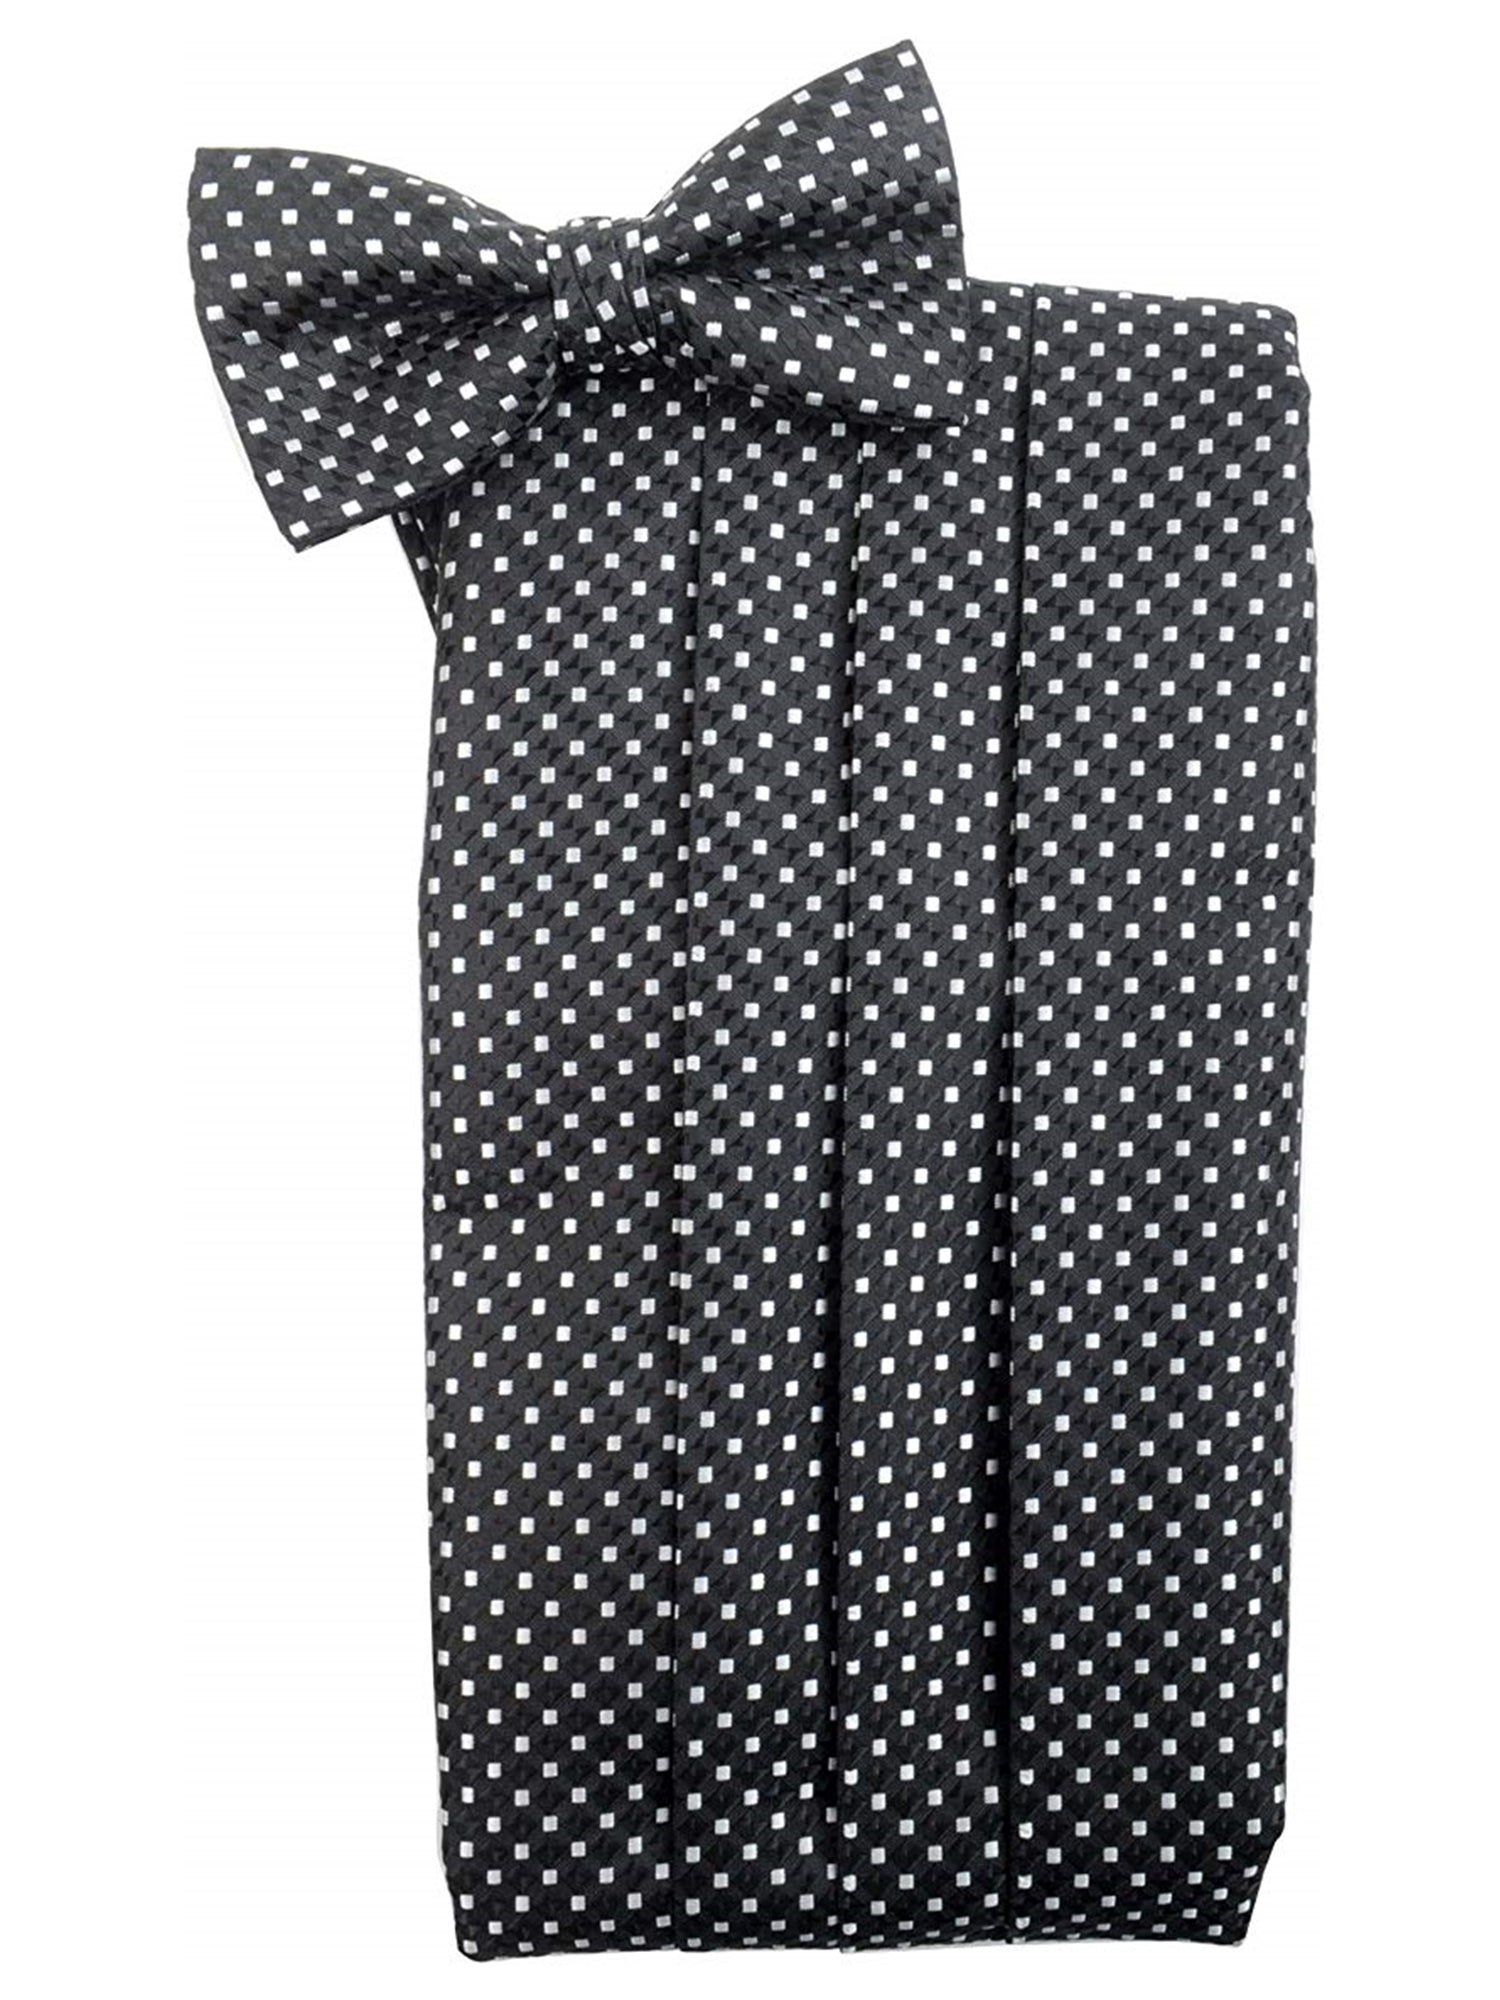 Men's Dotted Matching Adjustable Cummerbund and Bow tie Set Men's Solid Color Bow Tie TheDapperTie Black 1 Regular 